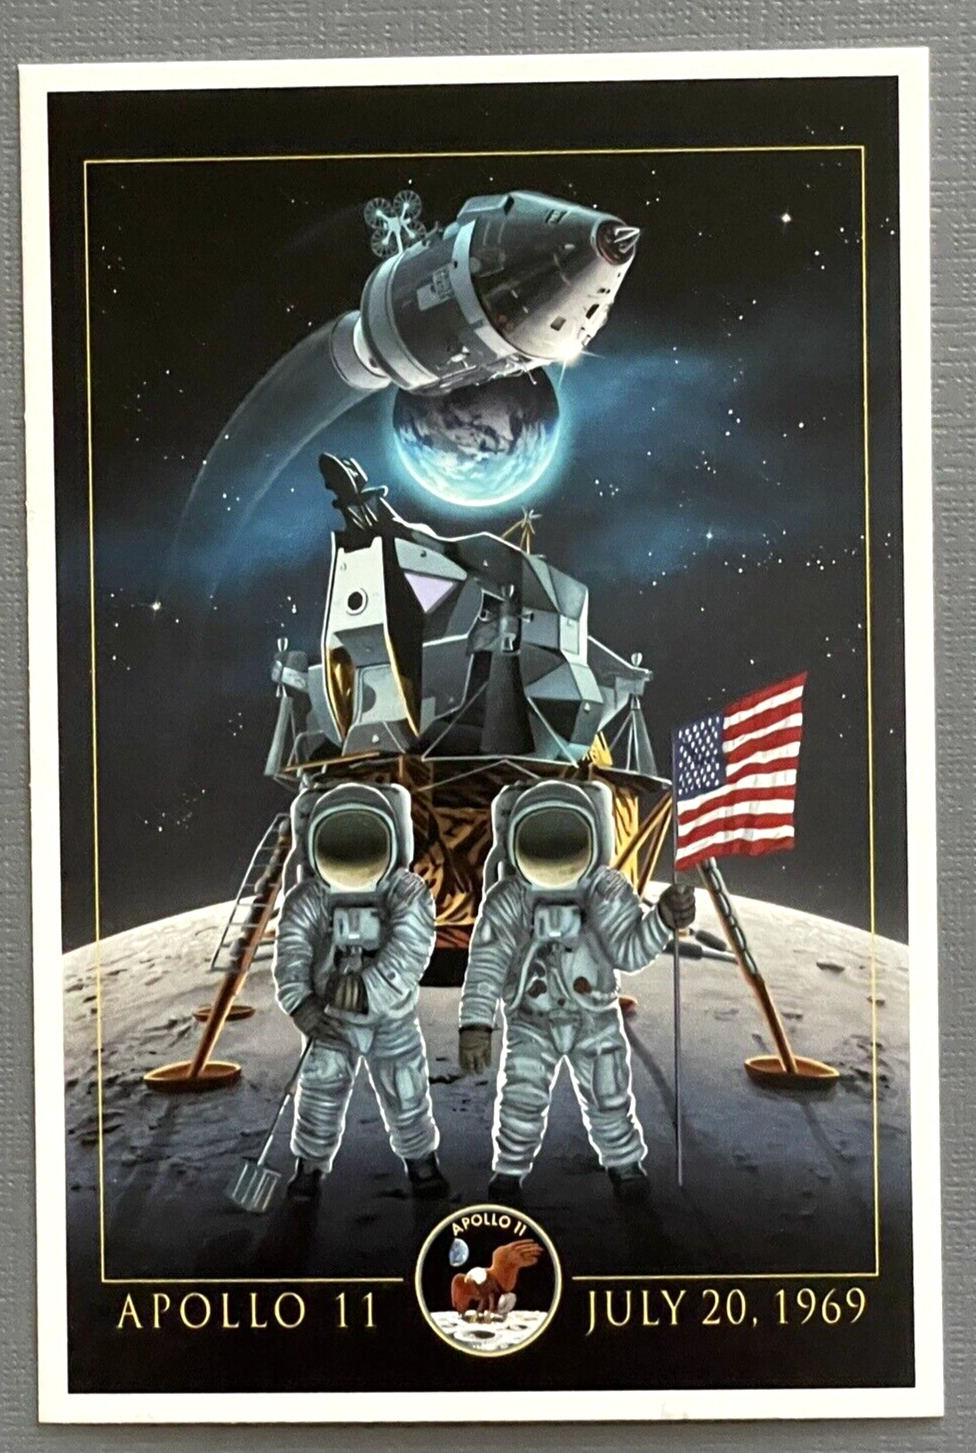 Apololo 11 - Lander and Astronauts - Lantern Press Postcard